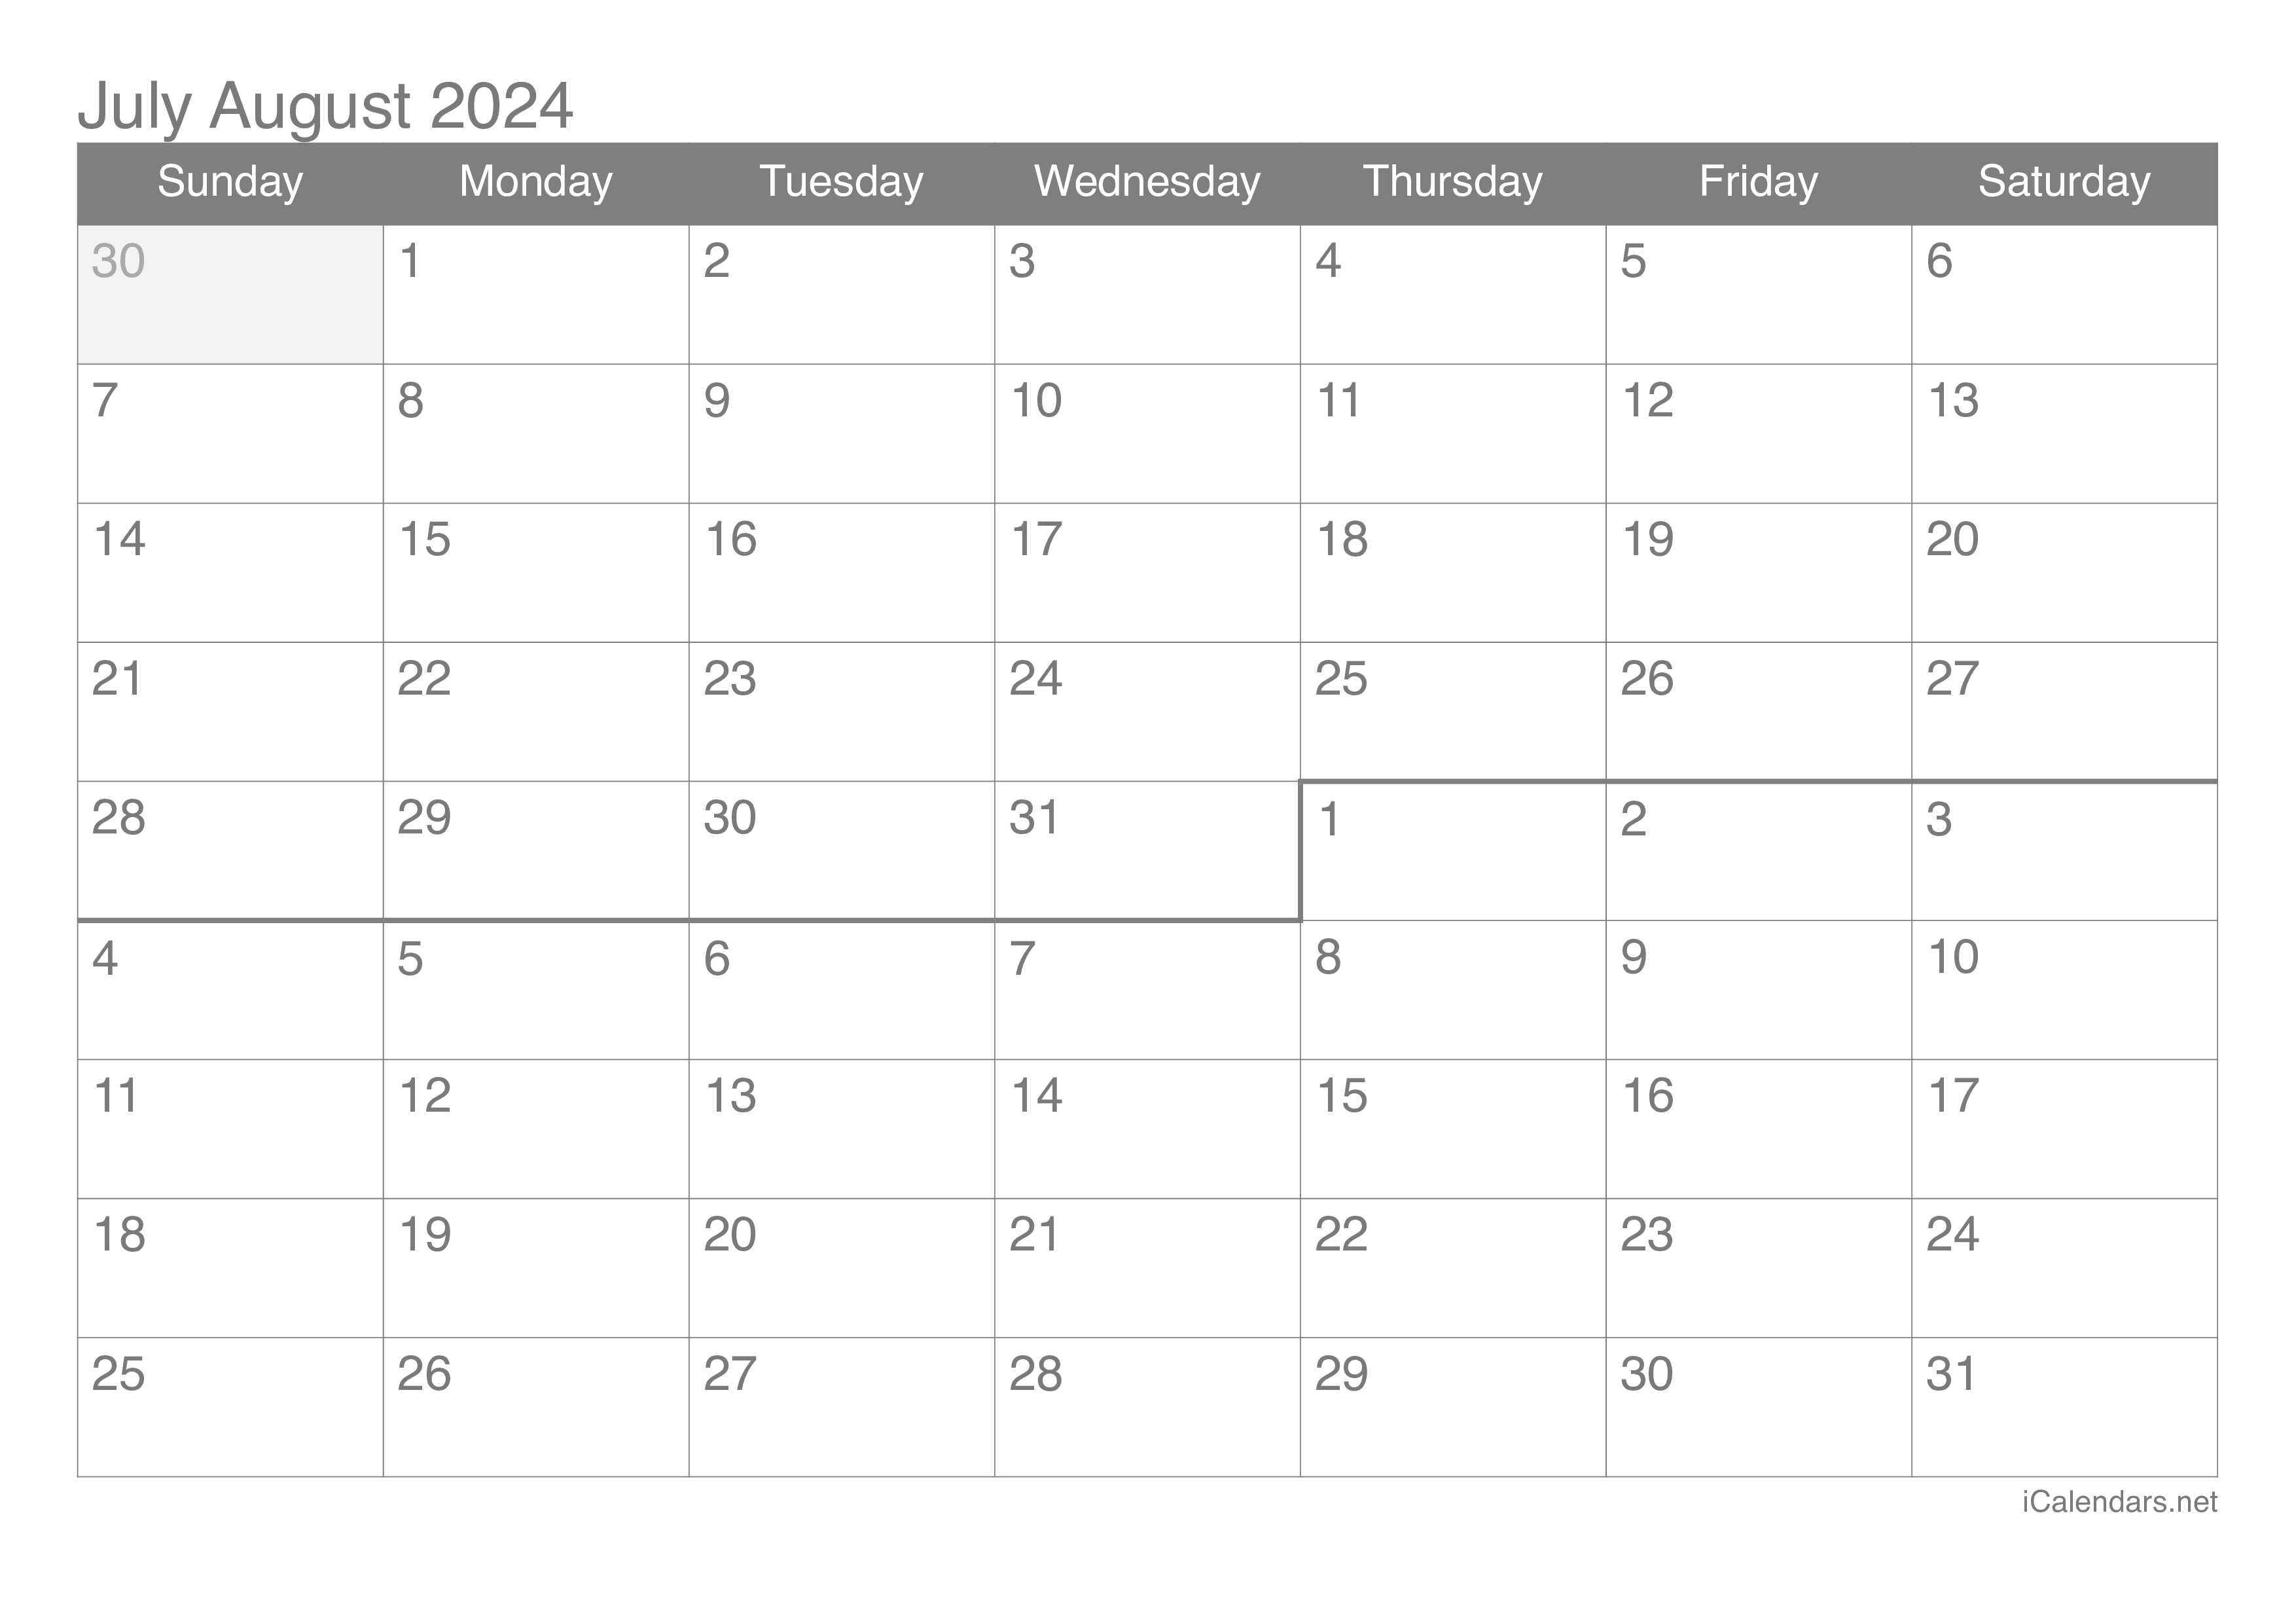 July And August 2024 Printable Calendar regarding Calendar For July August 2024